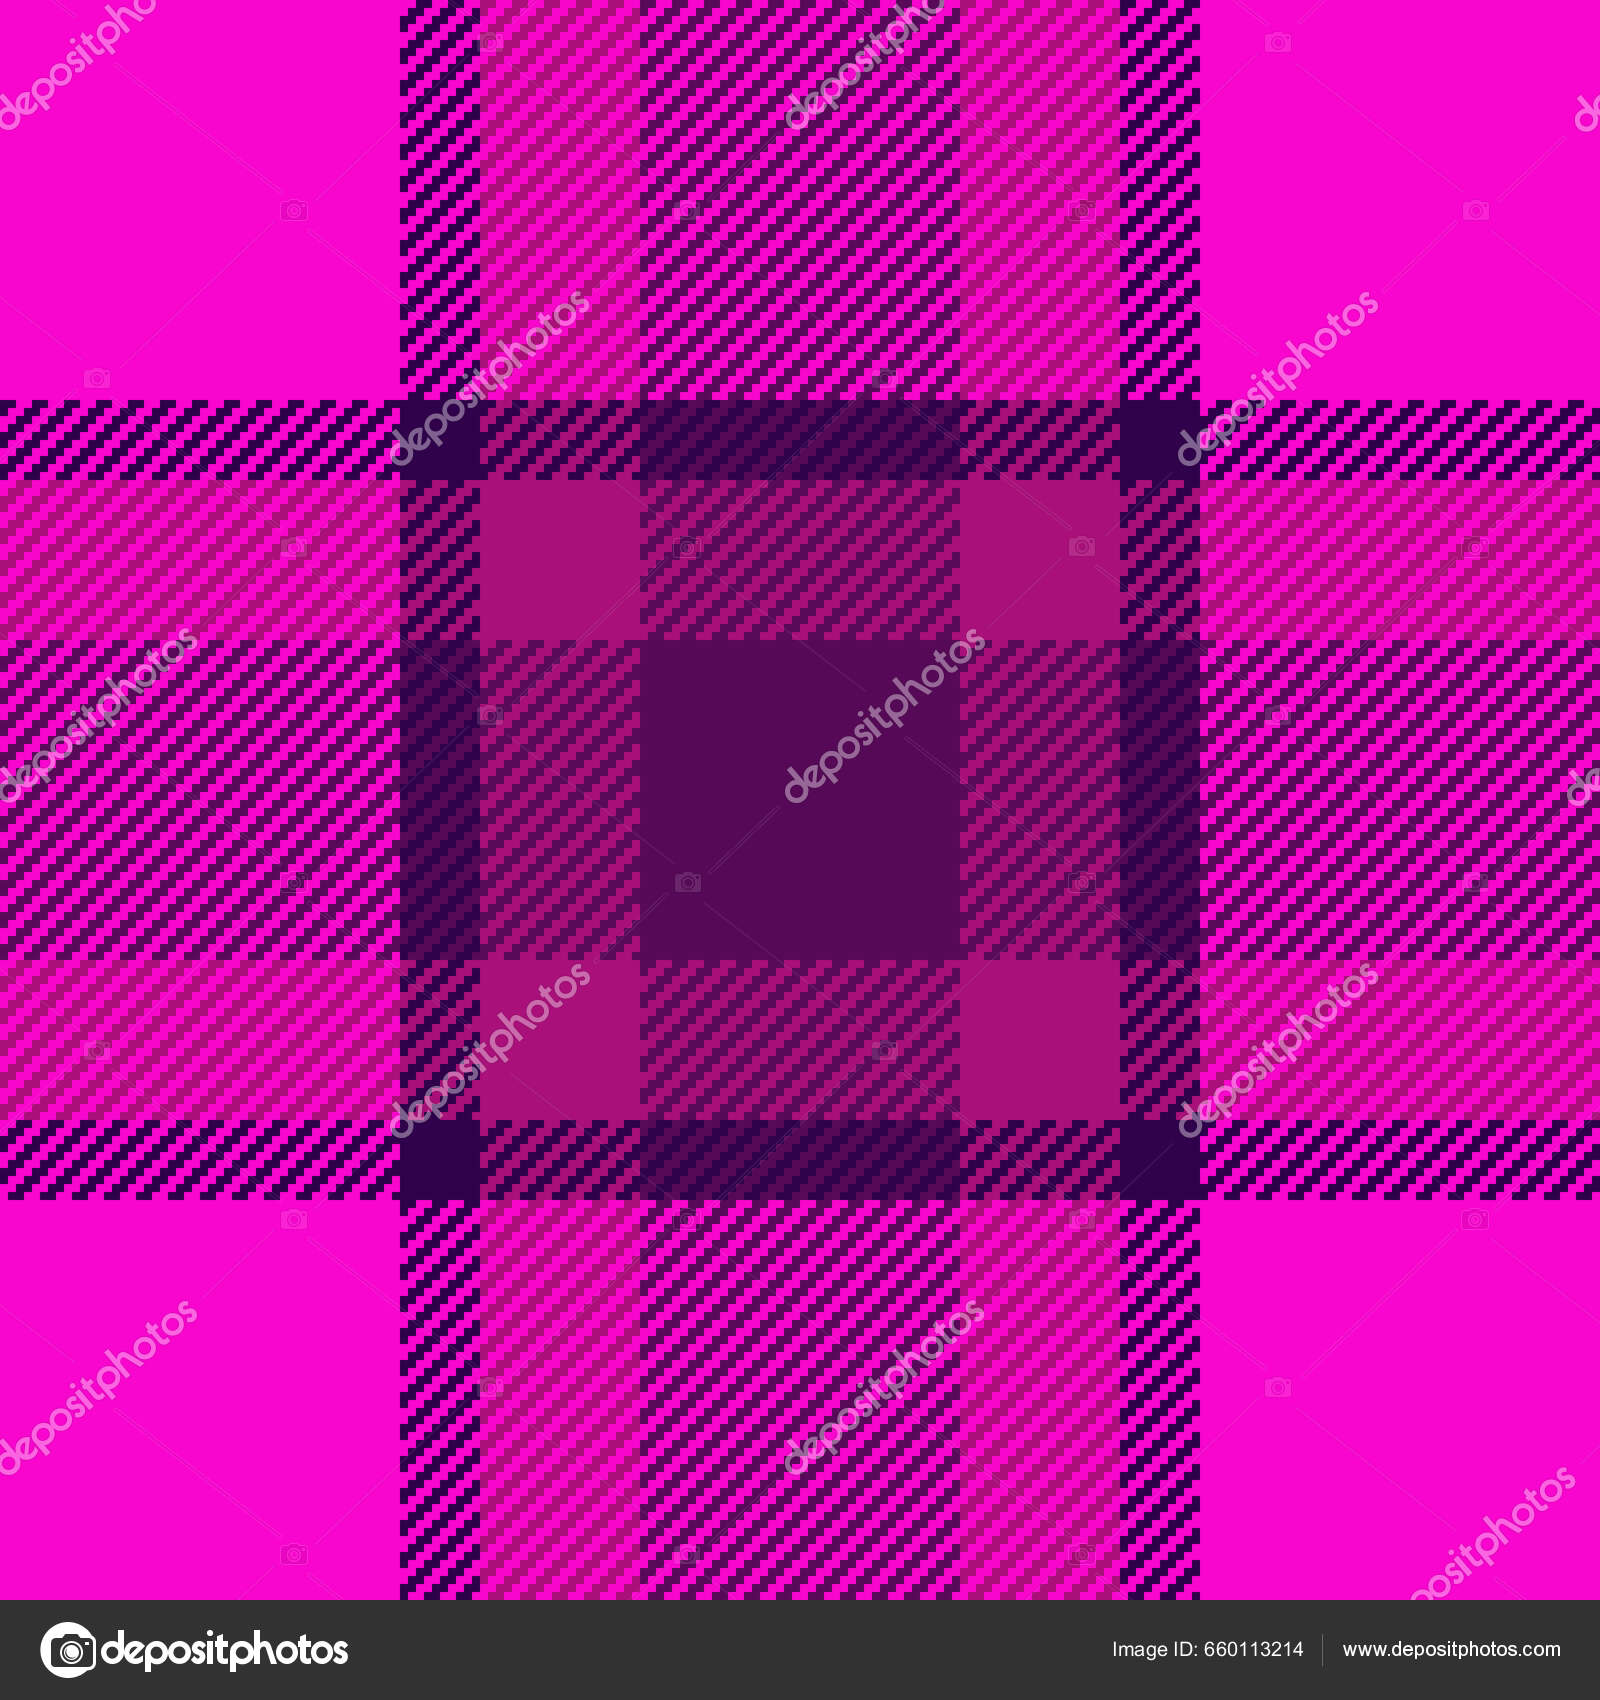 Black and pink tartan plaid seamless pattern Vector Image